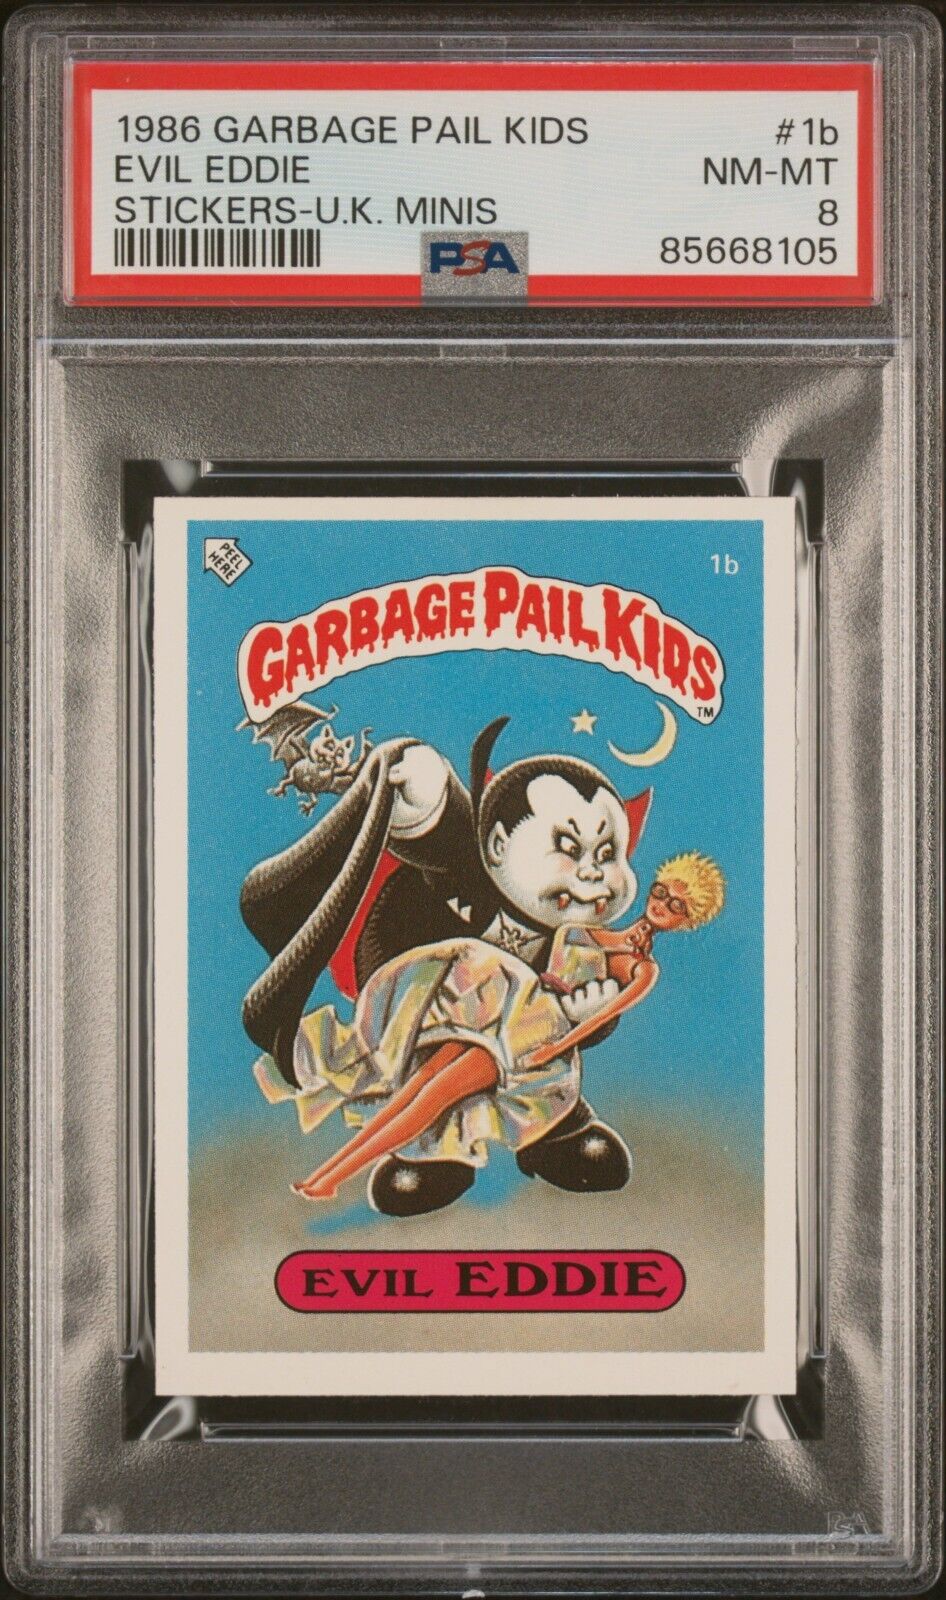 1986 Garbage Pail Kids OS1 Series 1 UK Mini Evil Eddie 1b Card PSA 8 NM-MT GPK